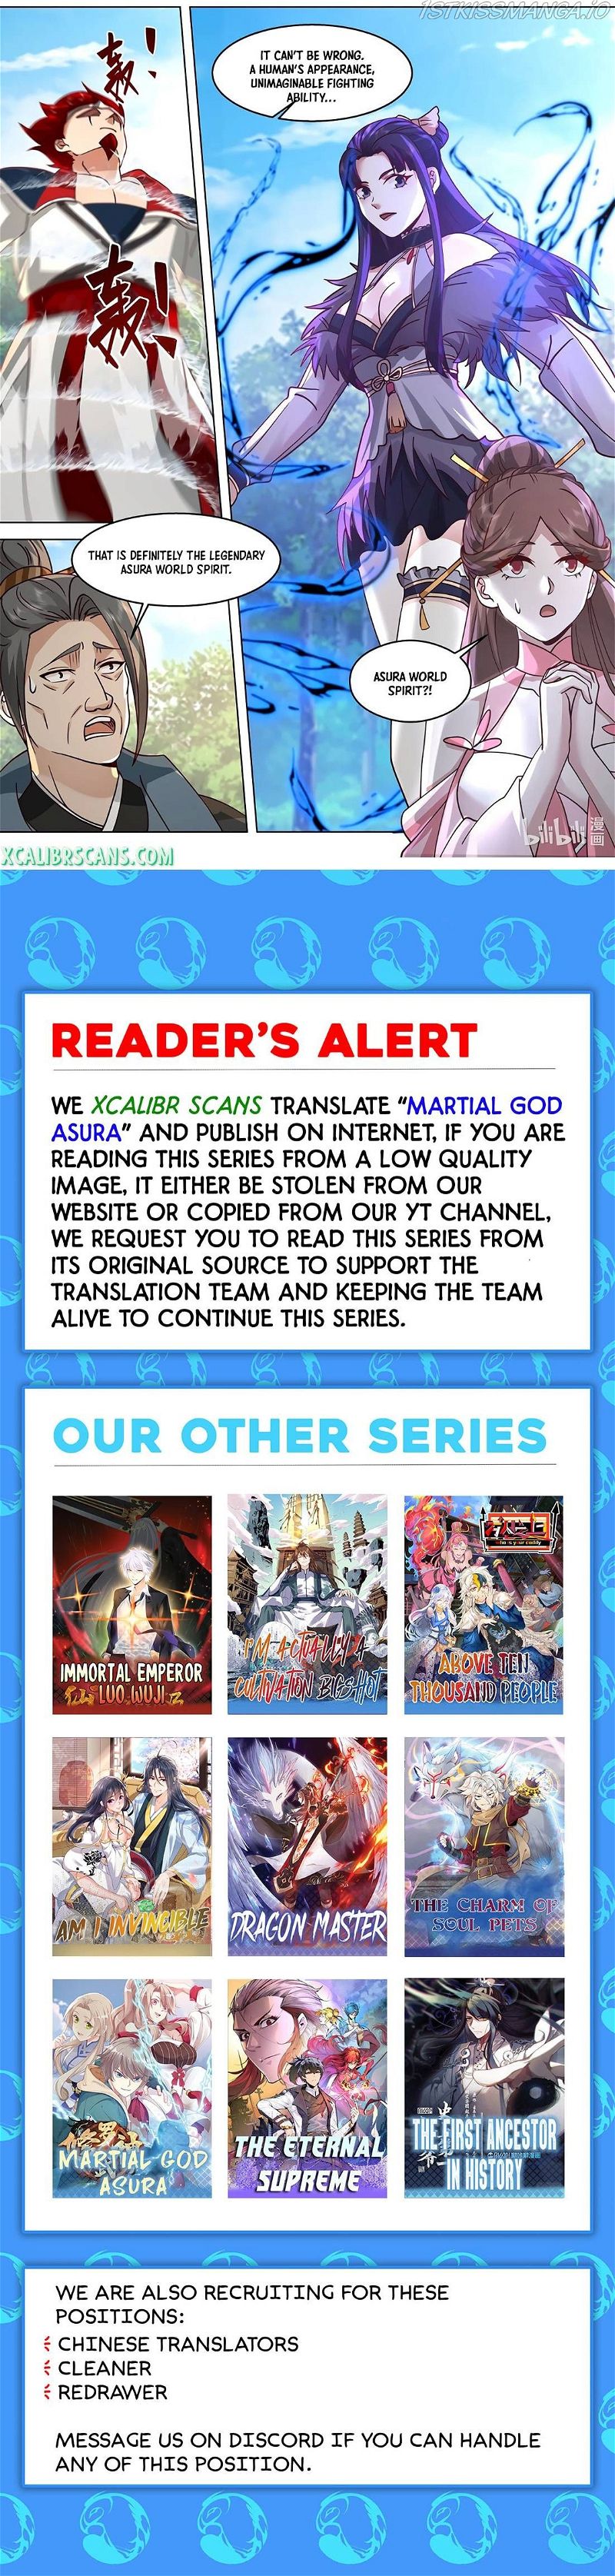 Martial God Asura Chapter 511 page 10